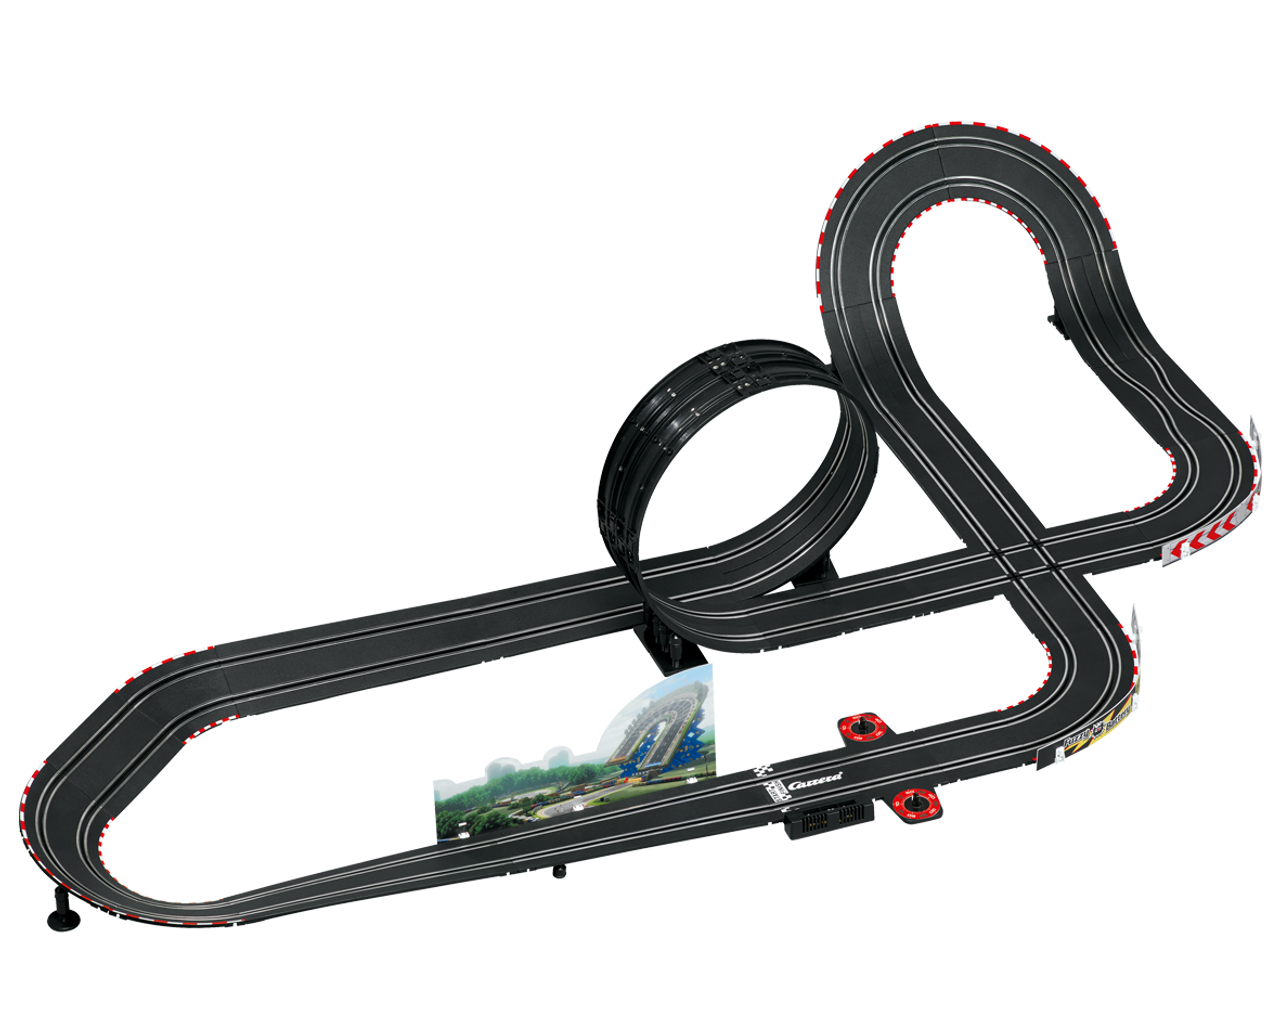 Circuit voitures Carrera GO!!! Mario Kart - 62491